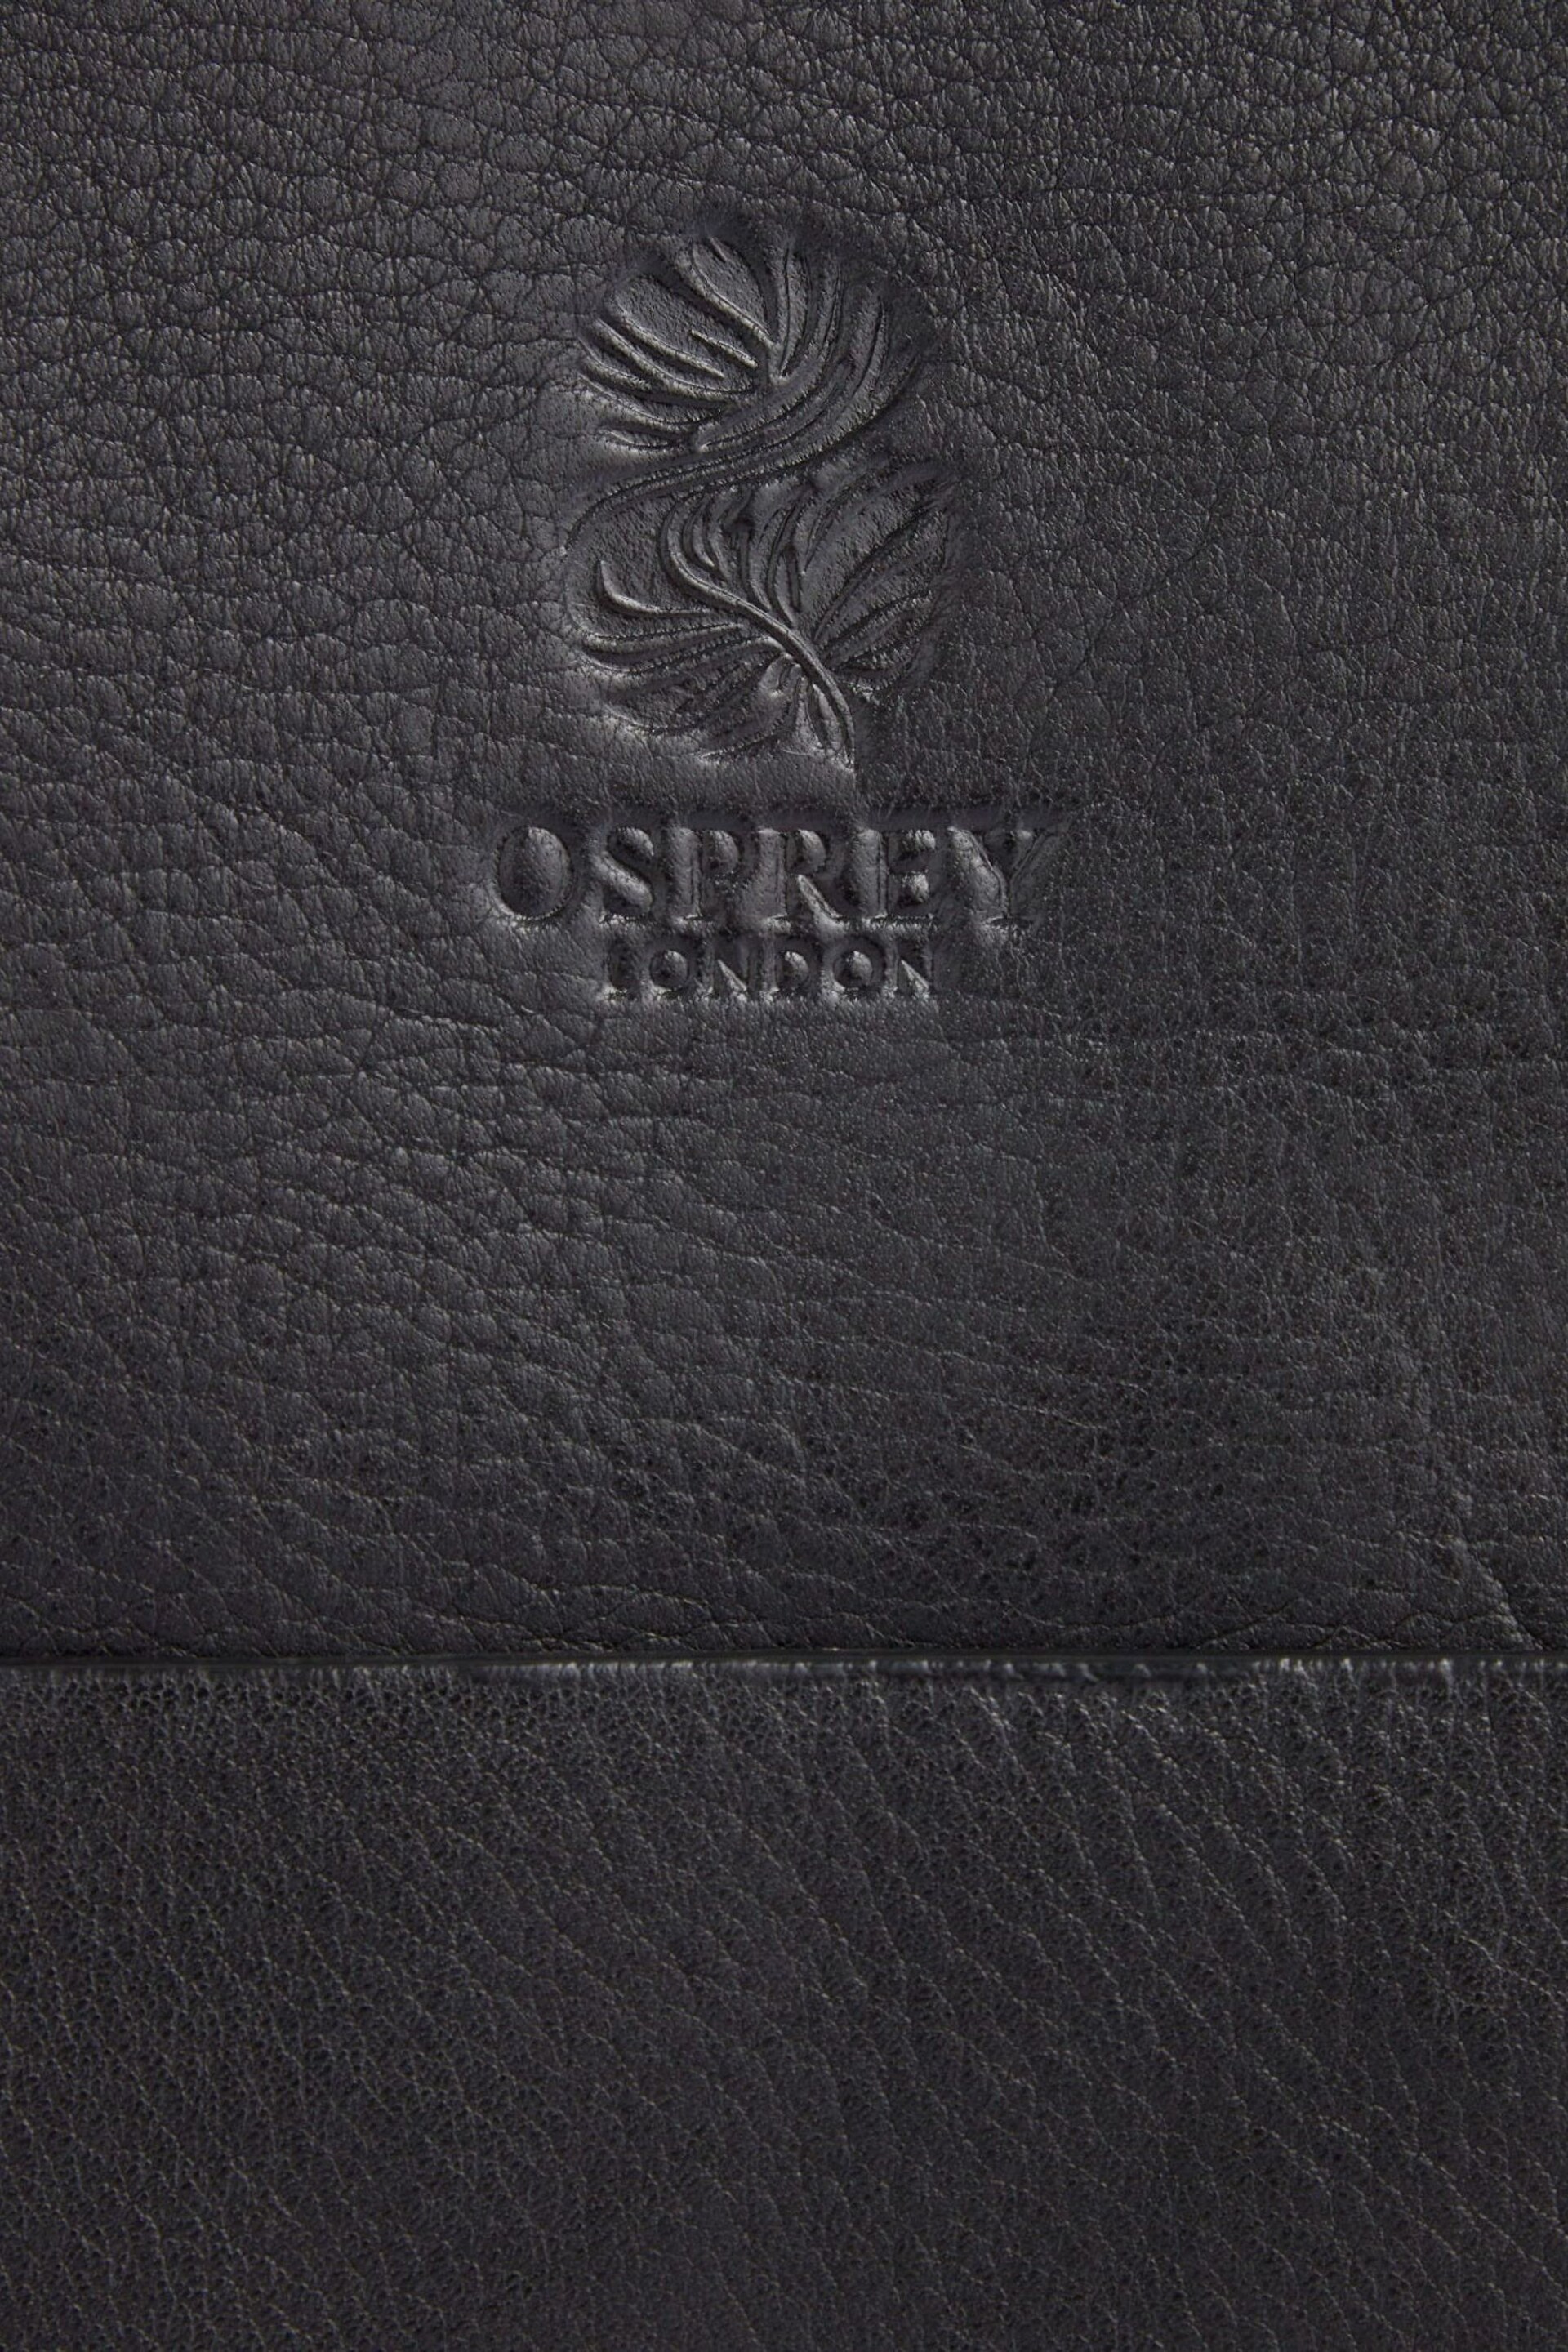 OSPREY LONDON The Vintage Leather Santa Fe Tote Bag - Image 7 of 7